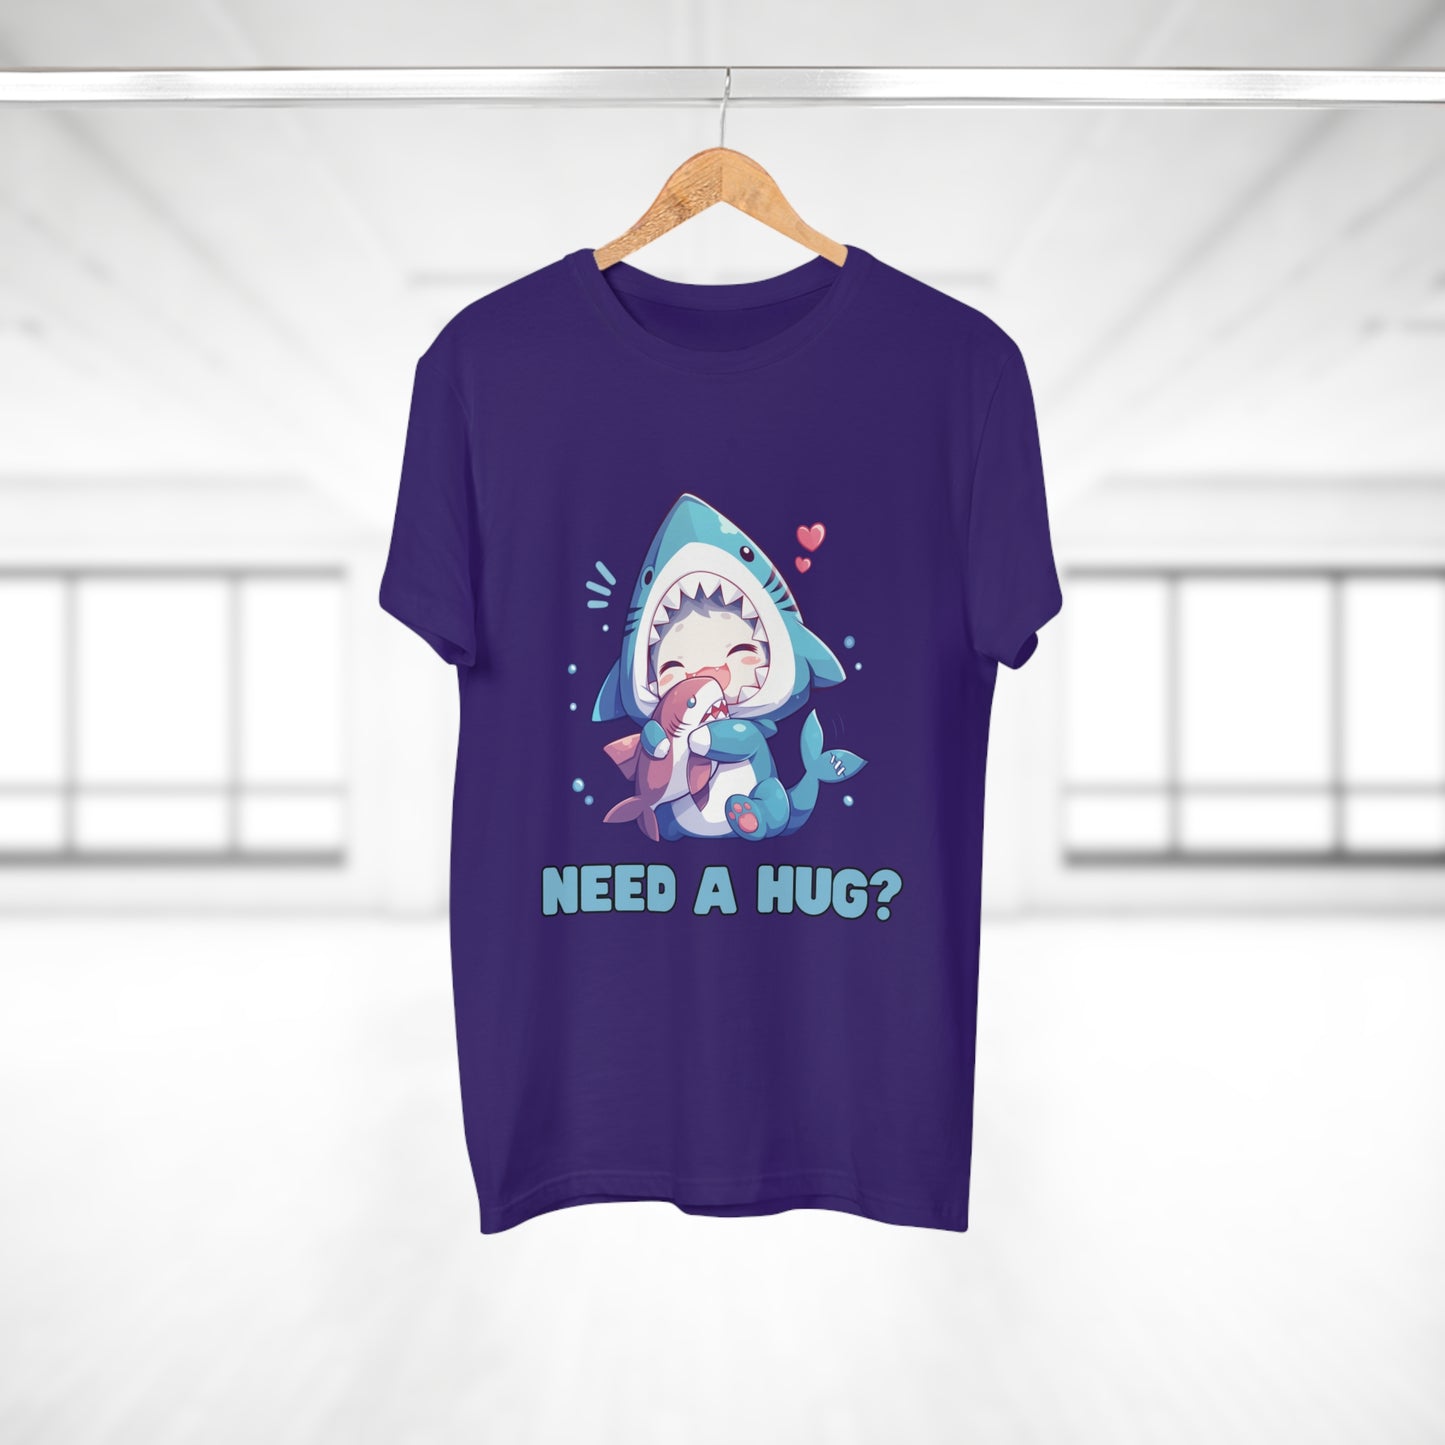 Kuschel Hai-Kitten T-Shirt